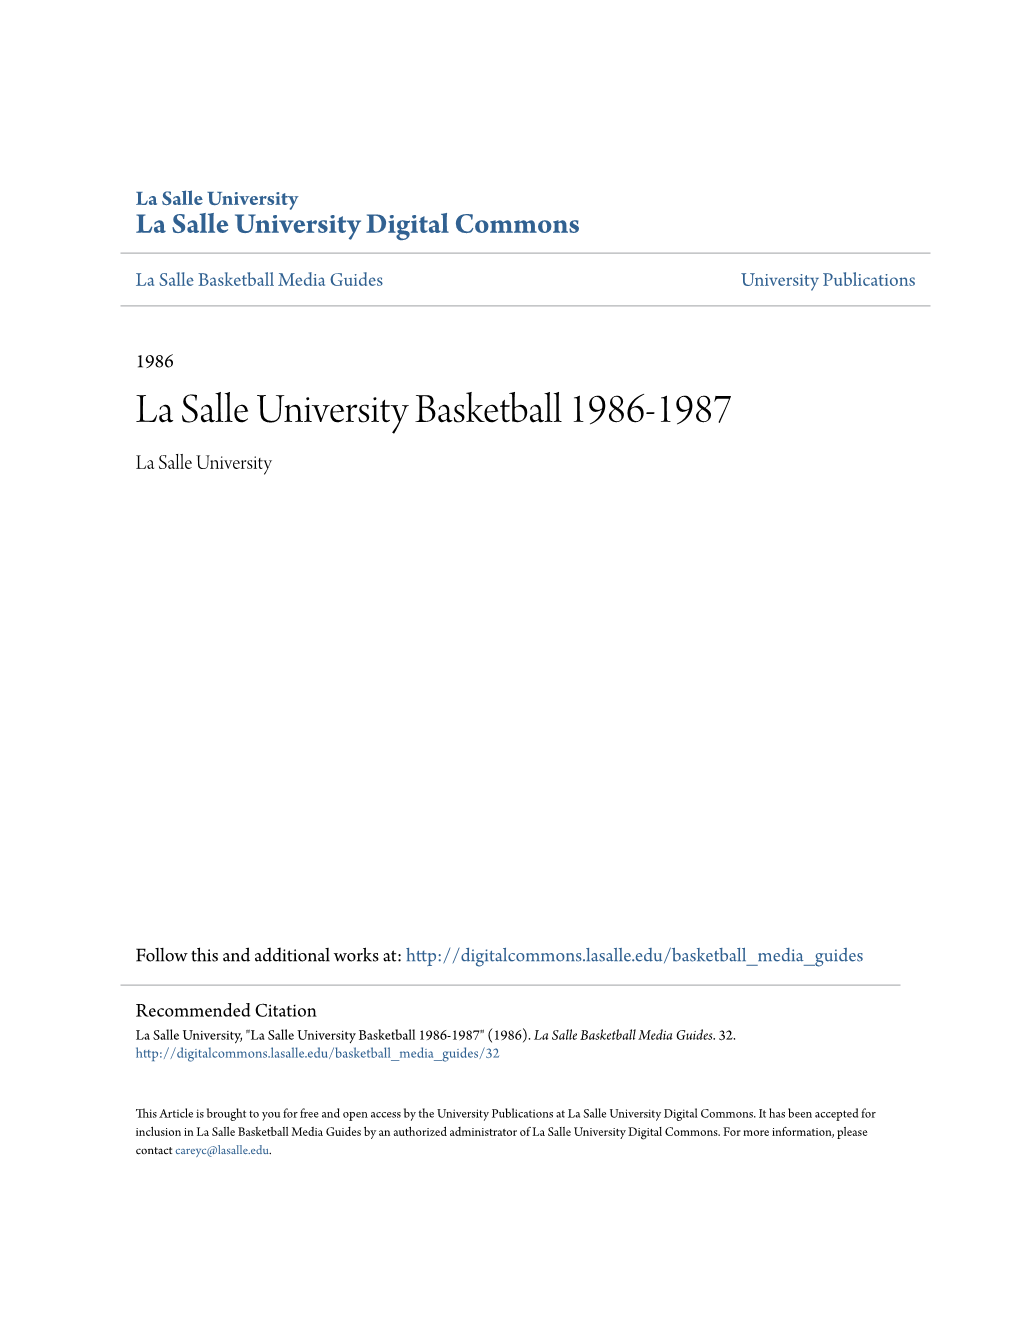 La Salle University Basketball 1986-1987 La Salle University